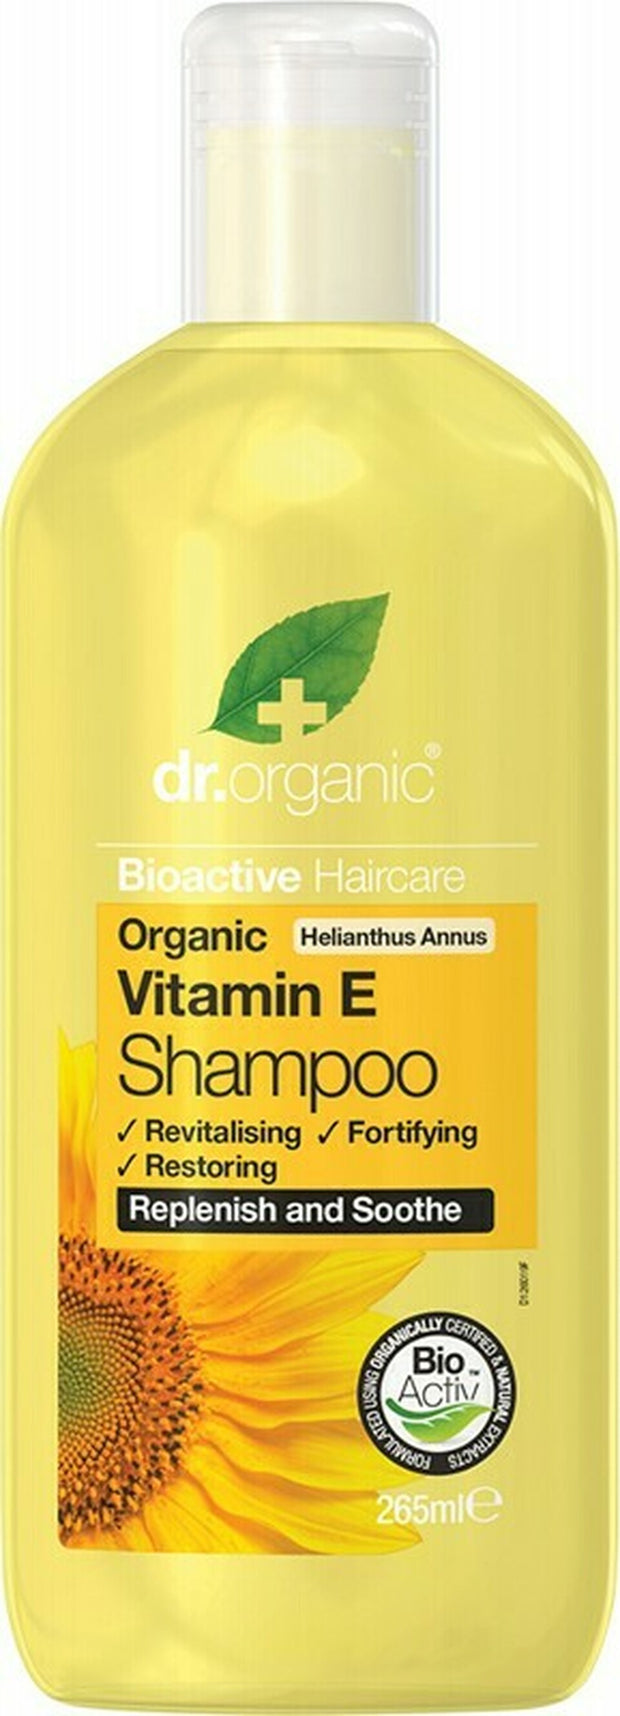 Vitamin E Organic Shampoo 265ml Dr Organic